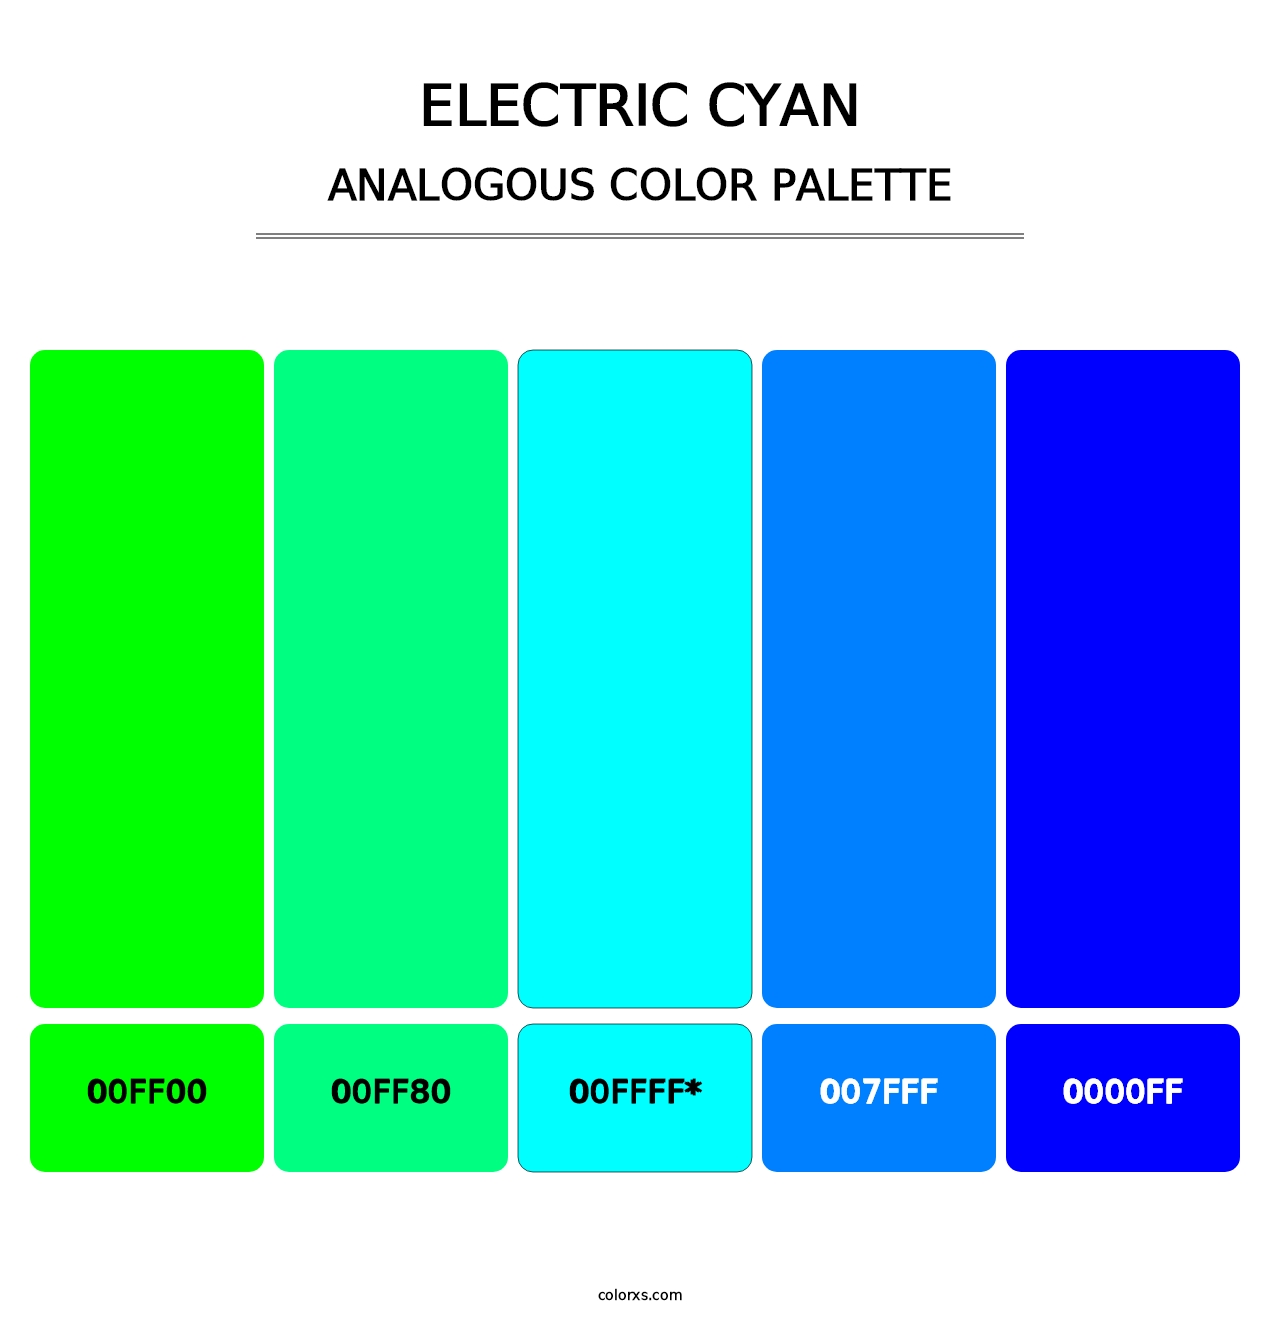 Electric Cyan - Analogous Color Palette